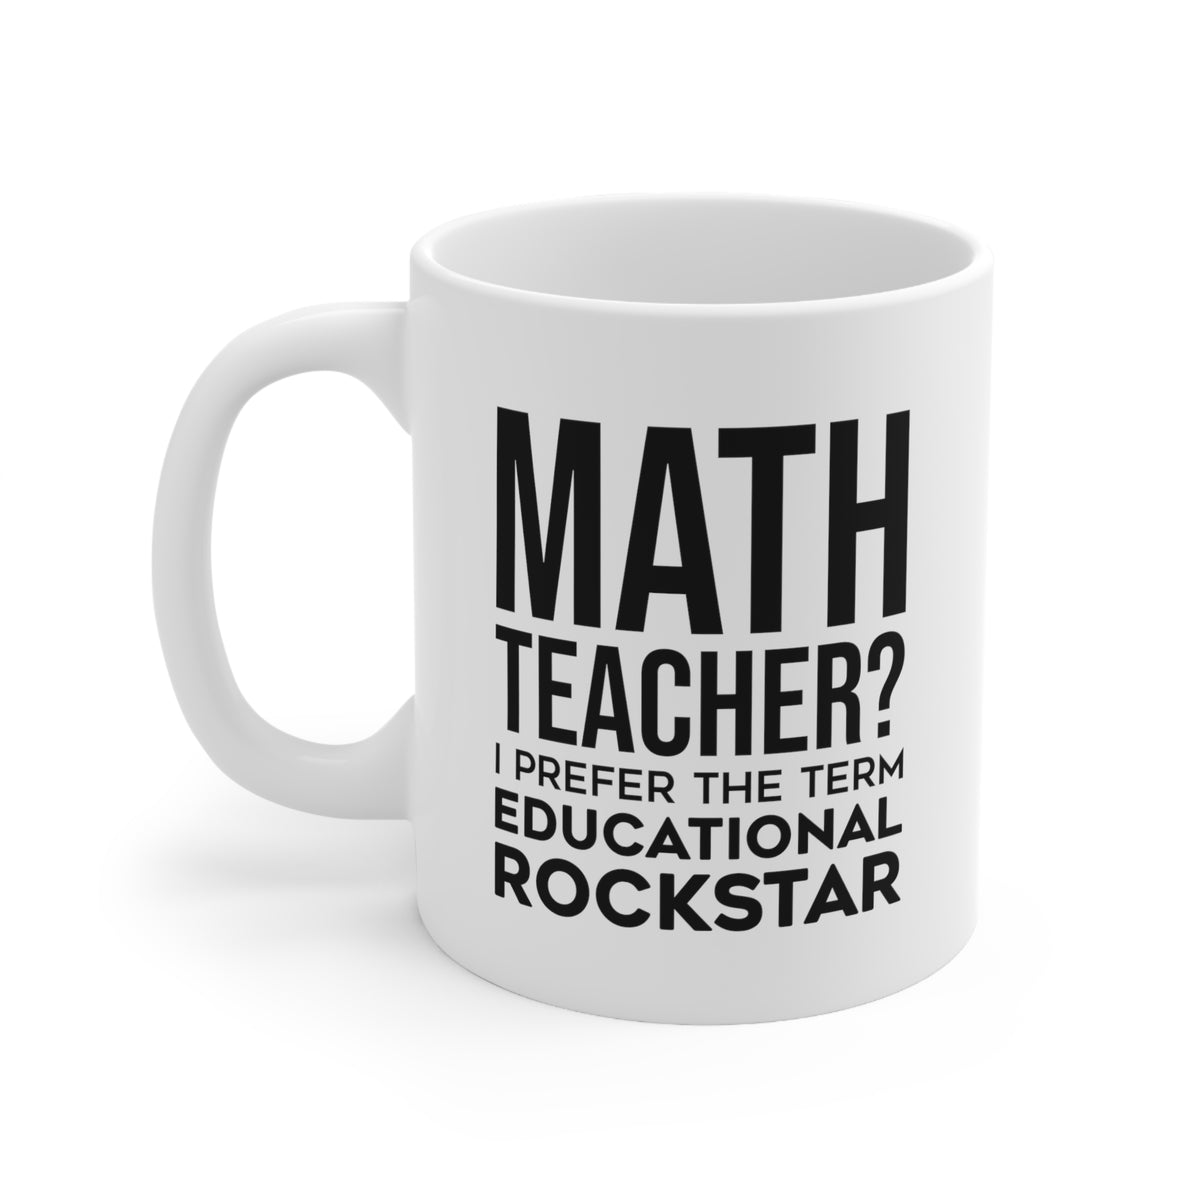 Funny Math Teacher Mug - Math Teacher? I Prefer The Term Educational Rockstar 11oz White Coffee Mug, Tea Cup Best Gifts For Math Teacher